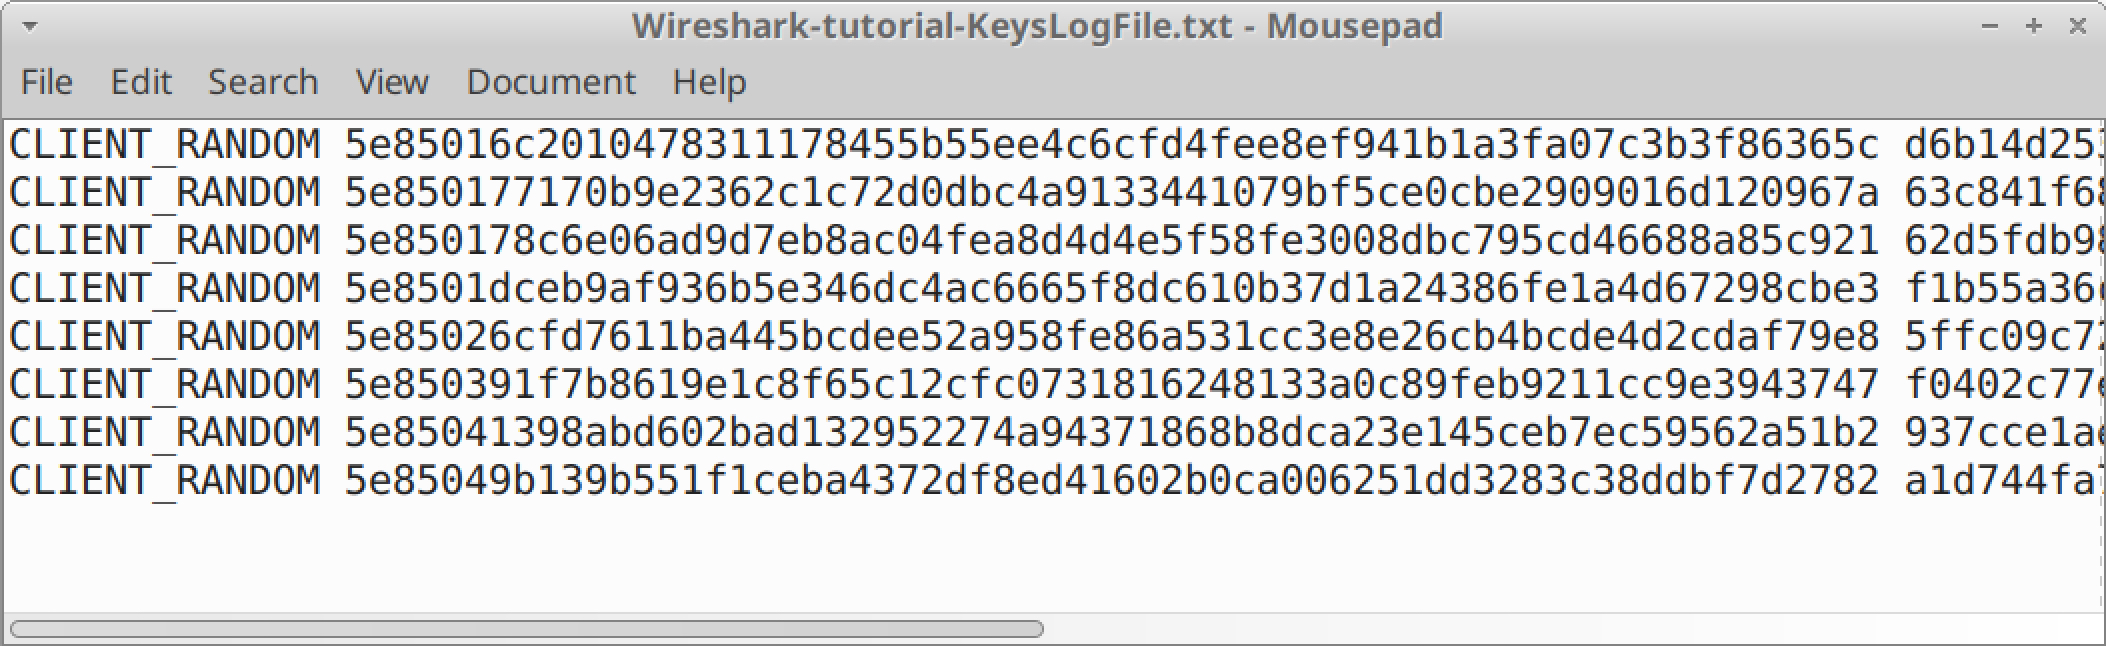 Wireshark-tutorial-KeysLogFile.txt - Mousepad